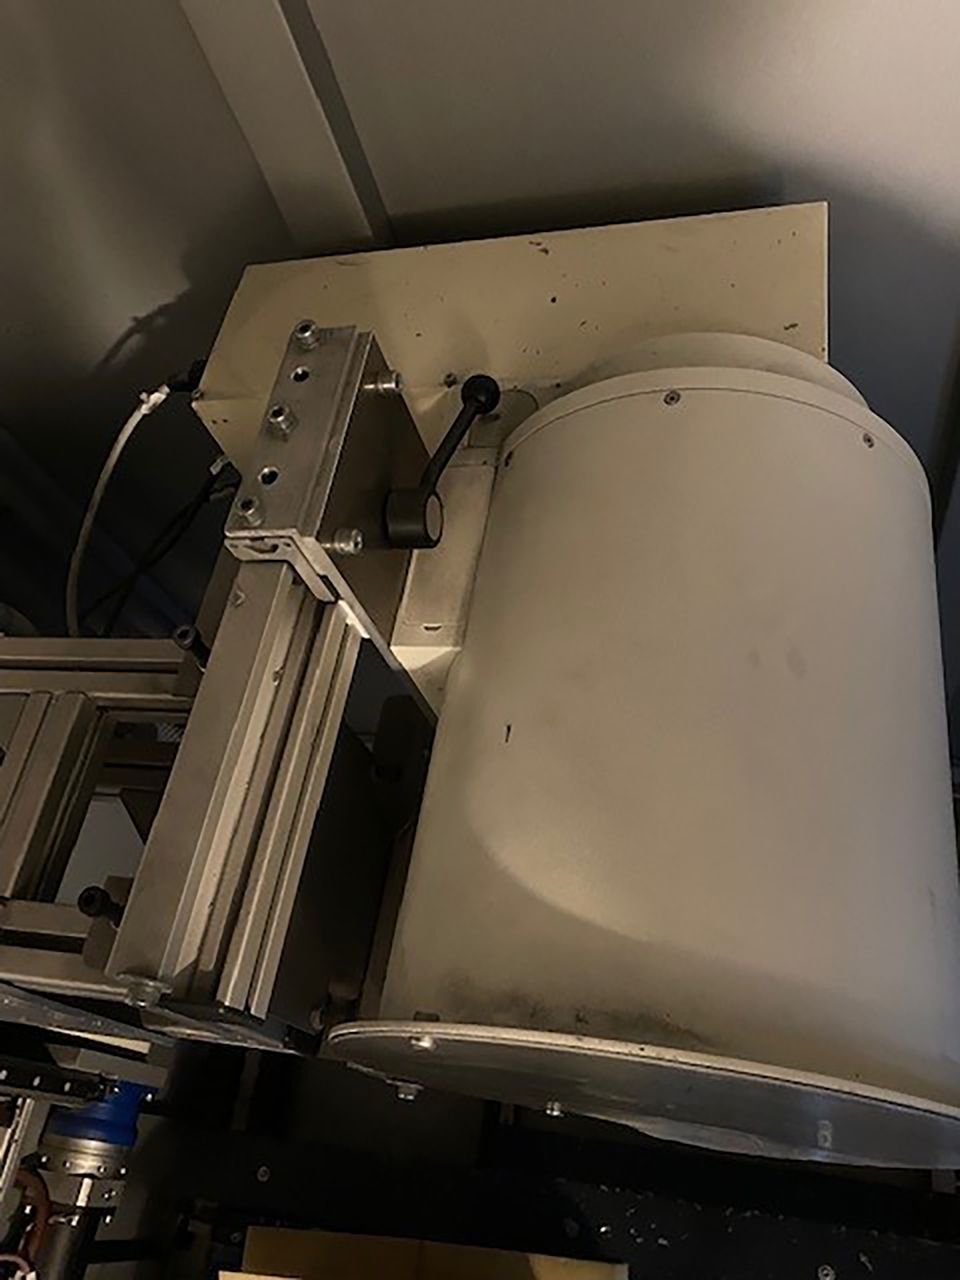 Seifert X Cube compact x-ray system ZU2214, used